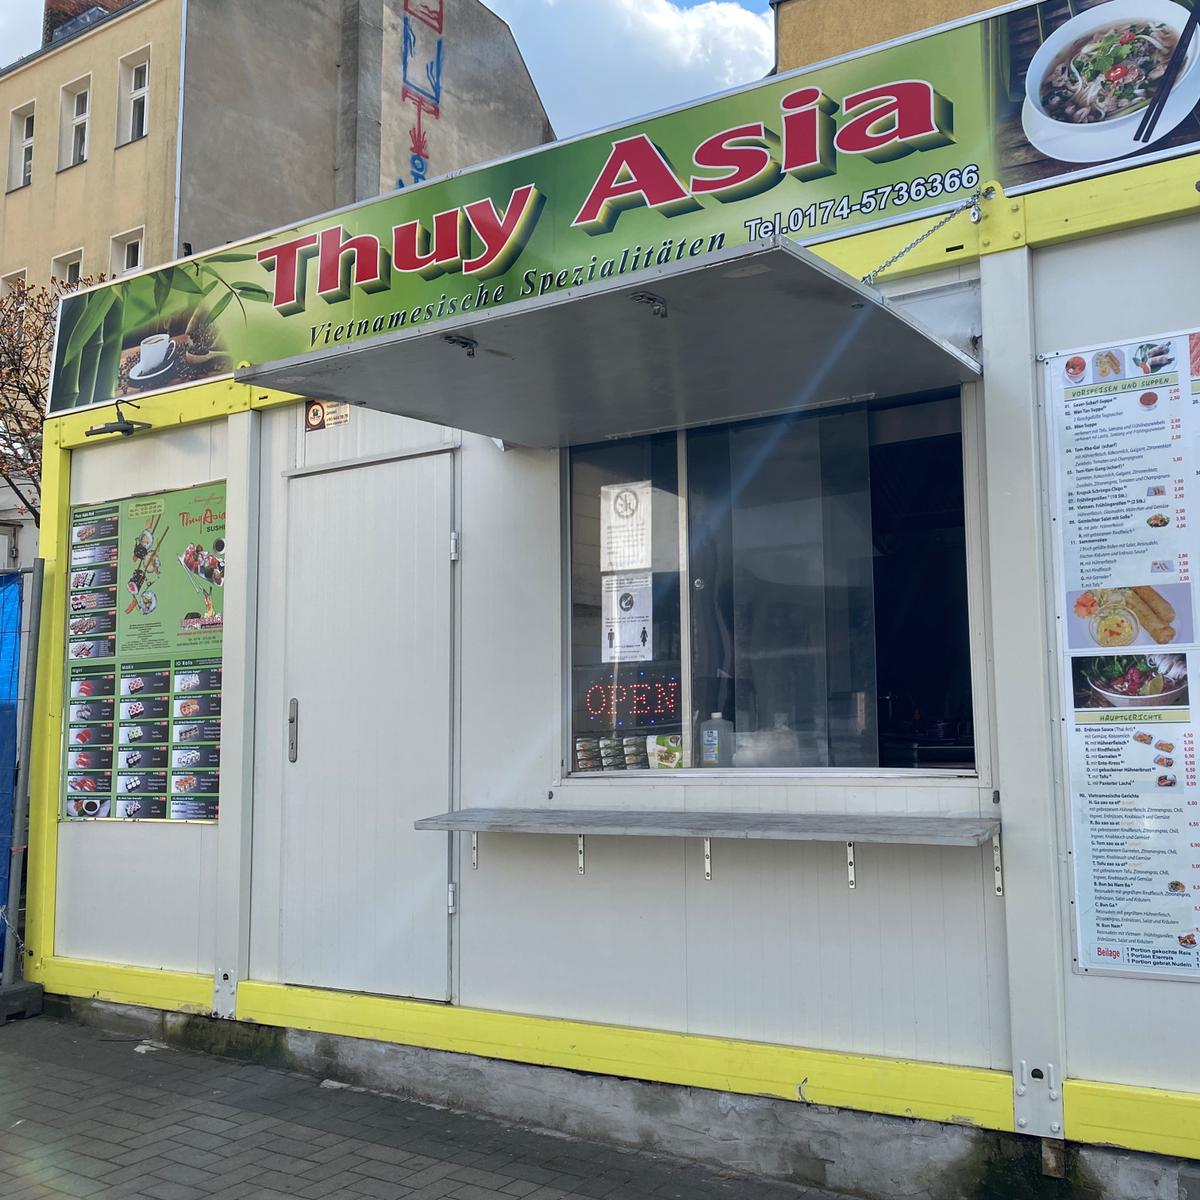 Restaurant "Thuy Asia" in Berlin